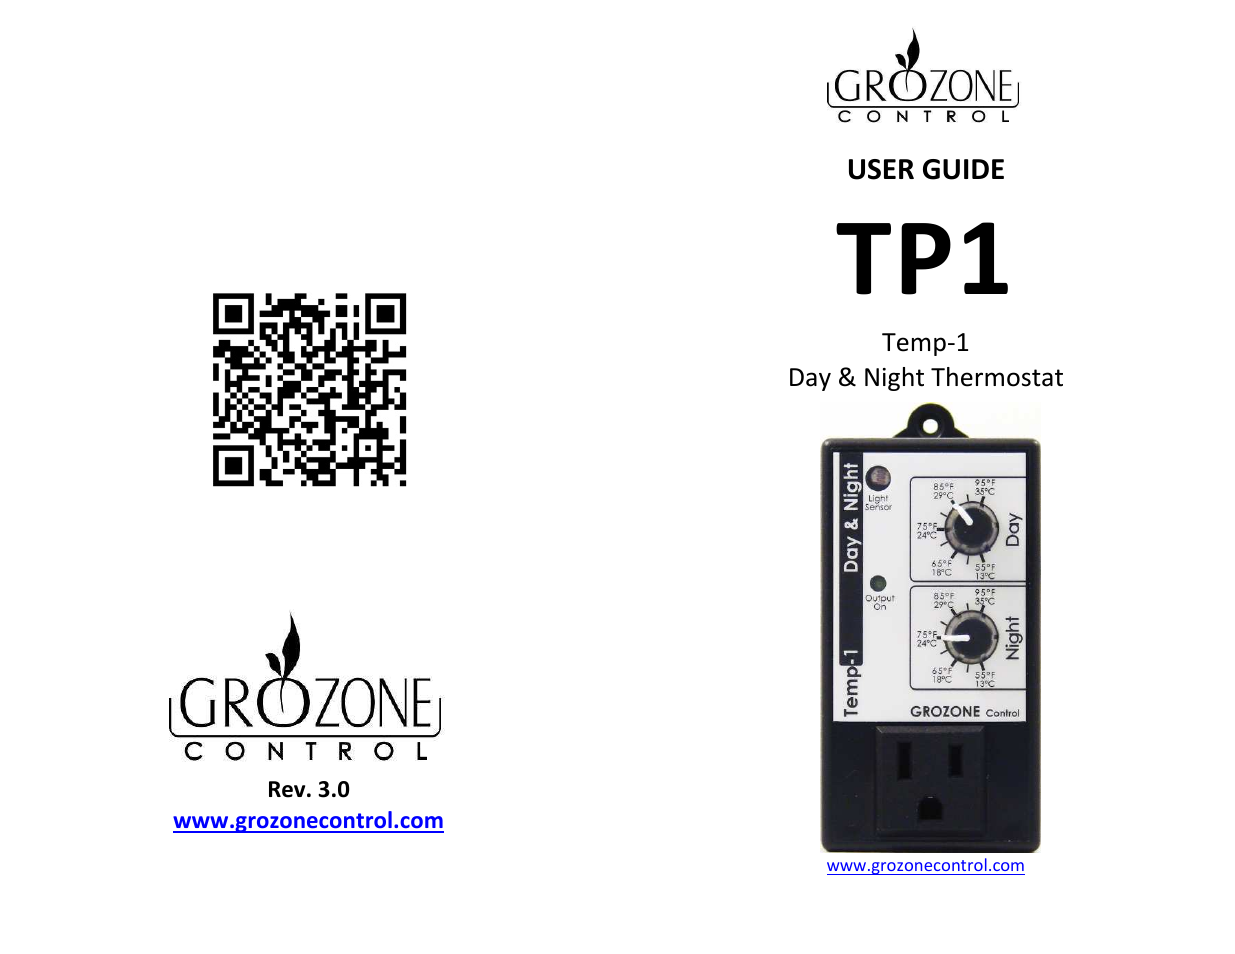 Grozone Control TP1 Day/Night Tempstat